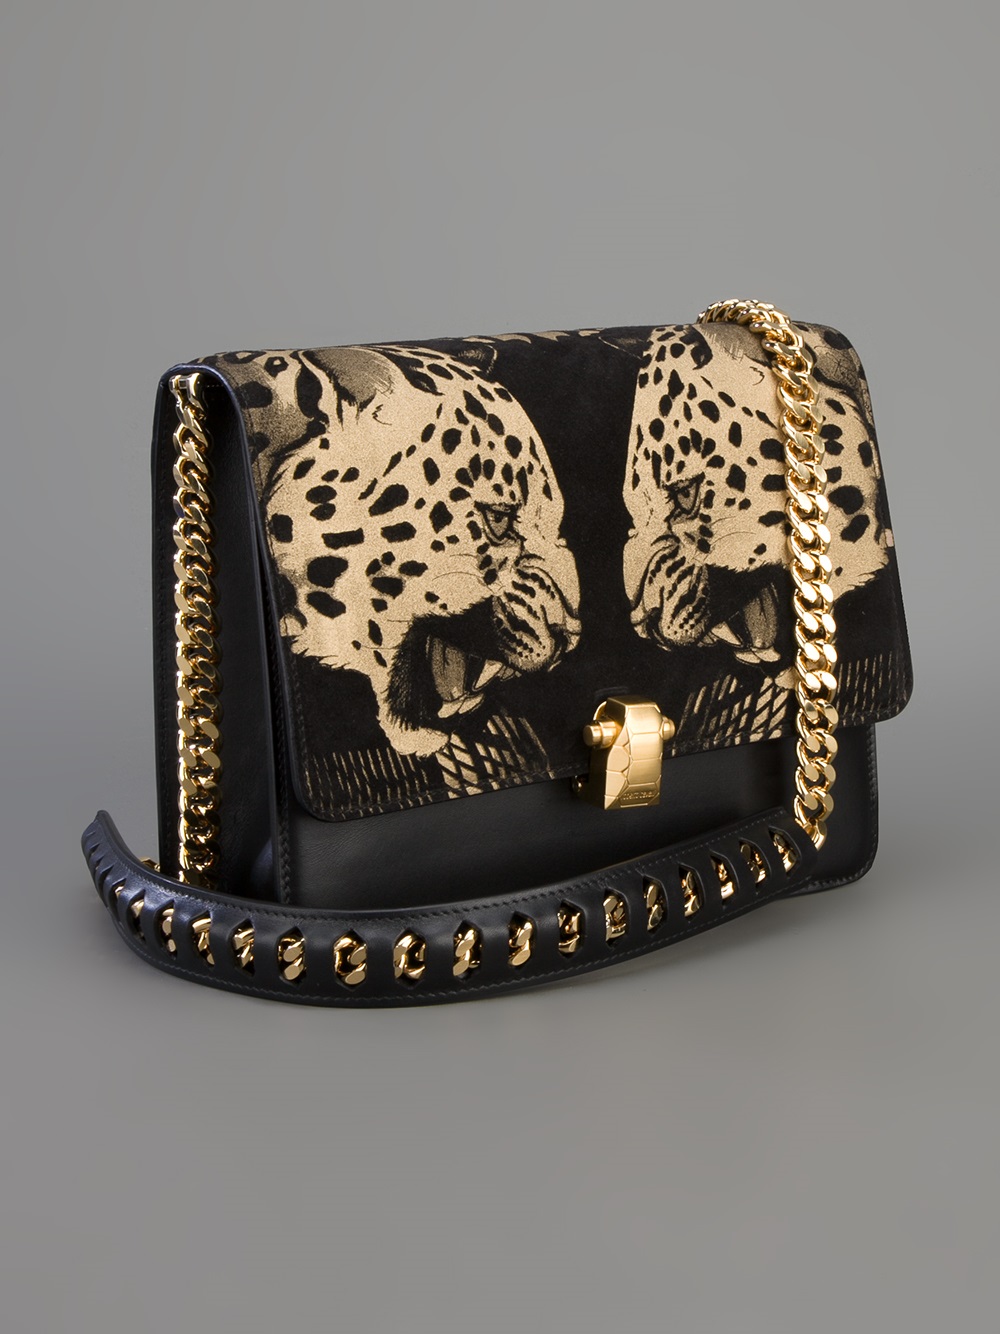 Roberto Cavalli Leopard Shoulder Bag in Black - Lyst